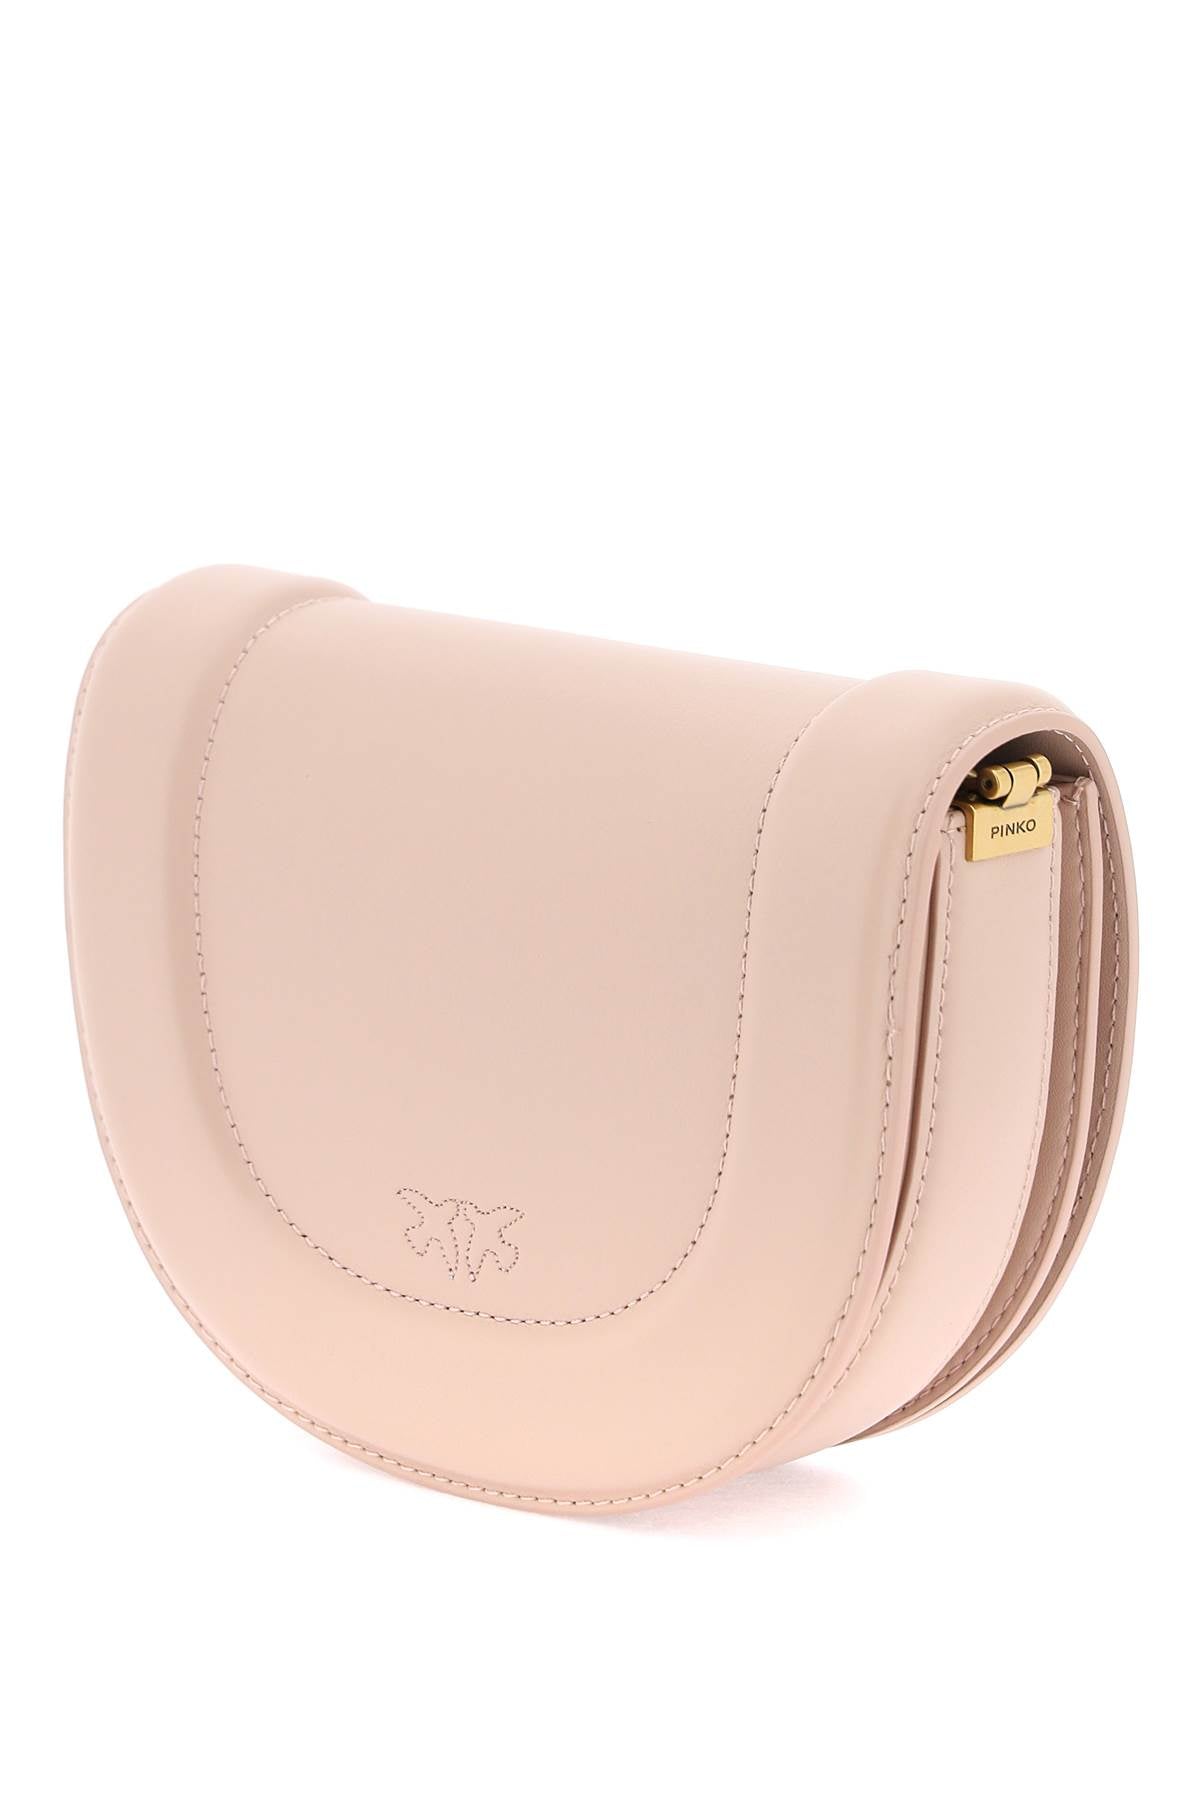 Pinko mini love bag click round leather shoulder bag-1